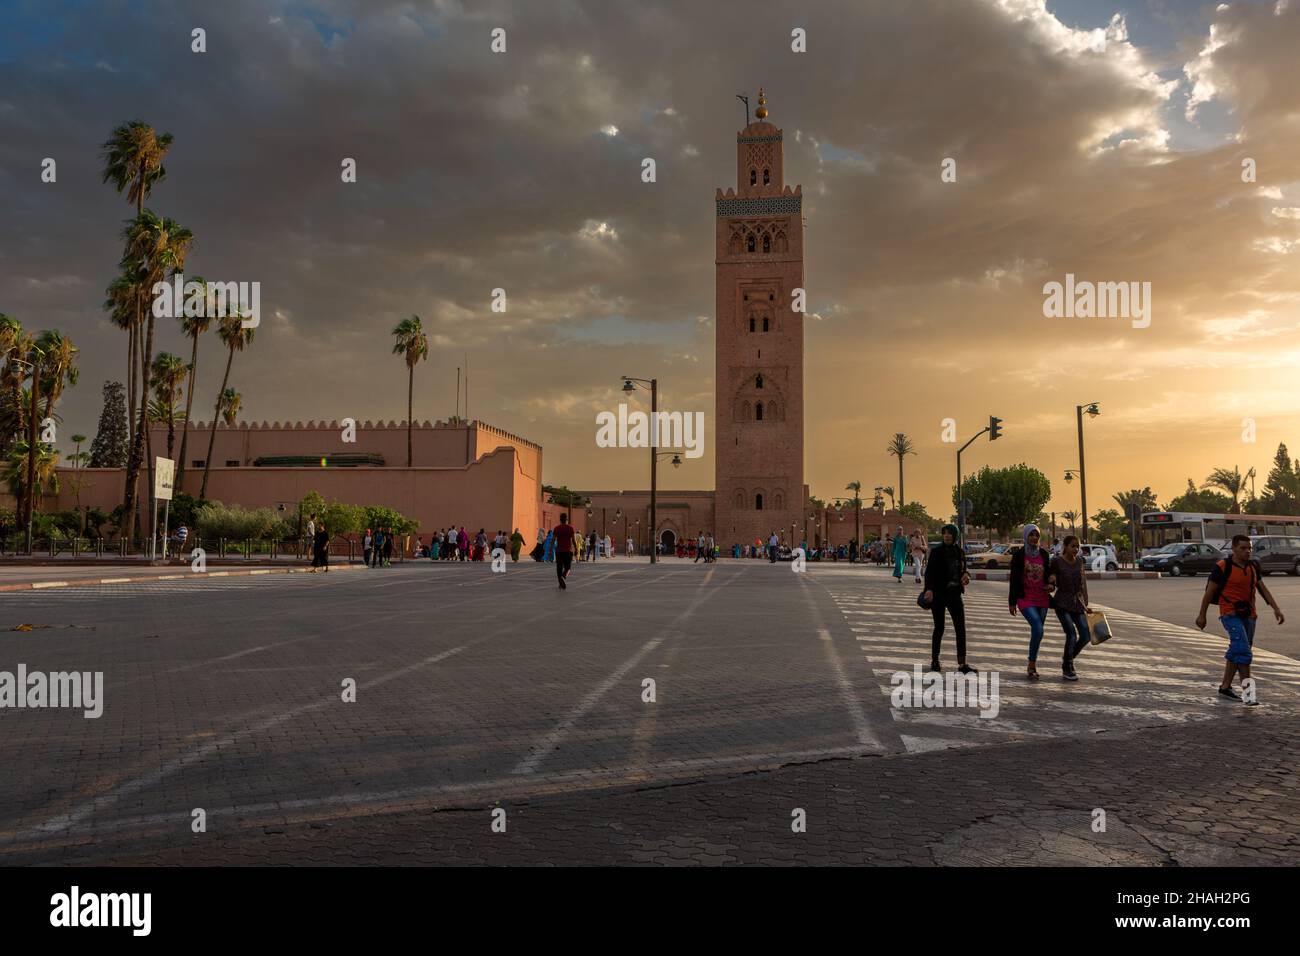 Djemma El Fna square which is taken into UNESCO heritage program, Marracechi Morocco, 2015ç Stock Photo